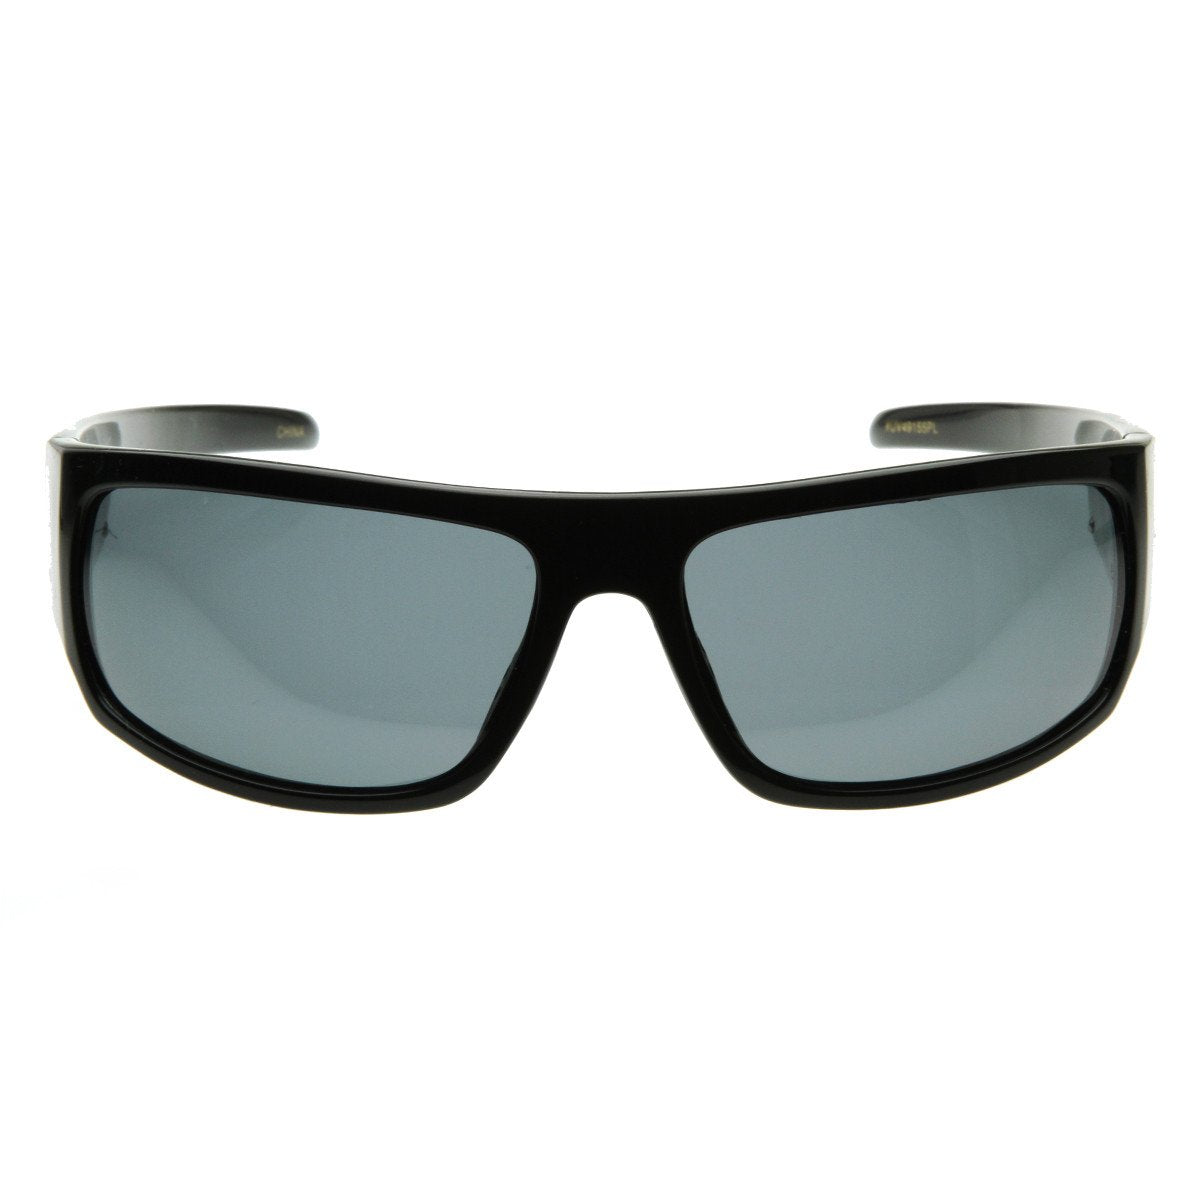 Gafas de sol deportivas premium con lentes polarizadas envolventes 8263